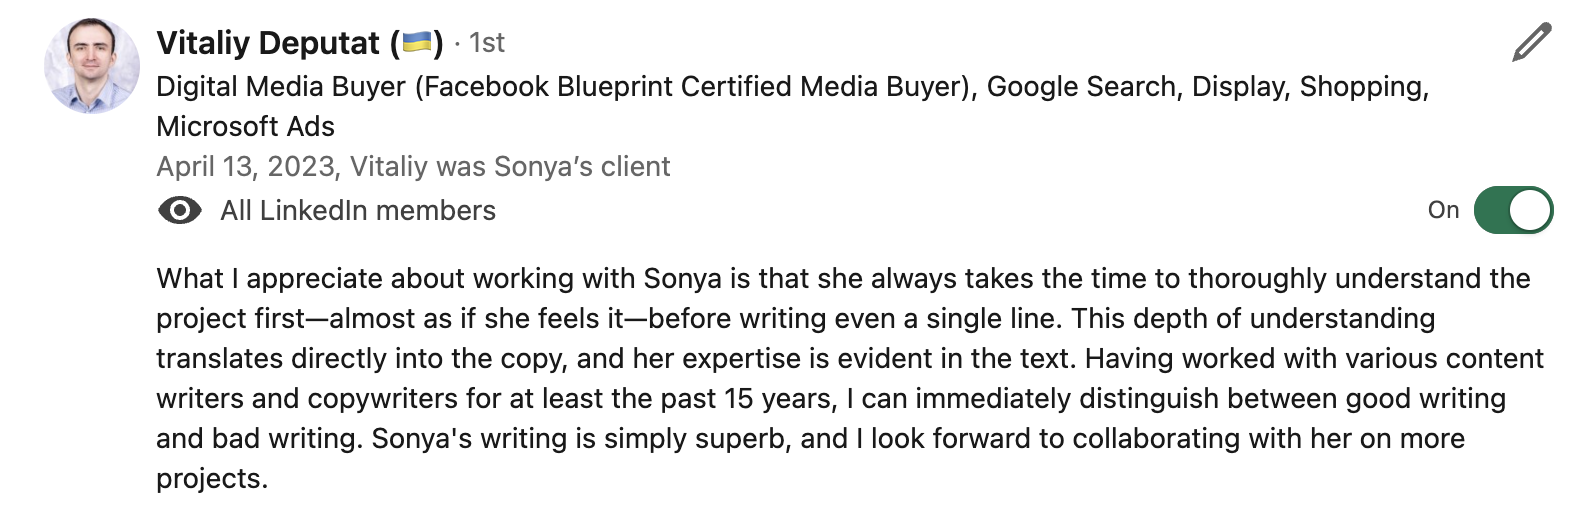 LinkedIn recommendation from Vitaliy Deputat for Sonya Gankina, talking about Sonya's depth of understanding of copywriting